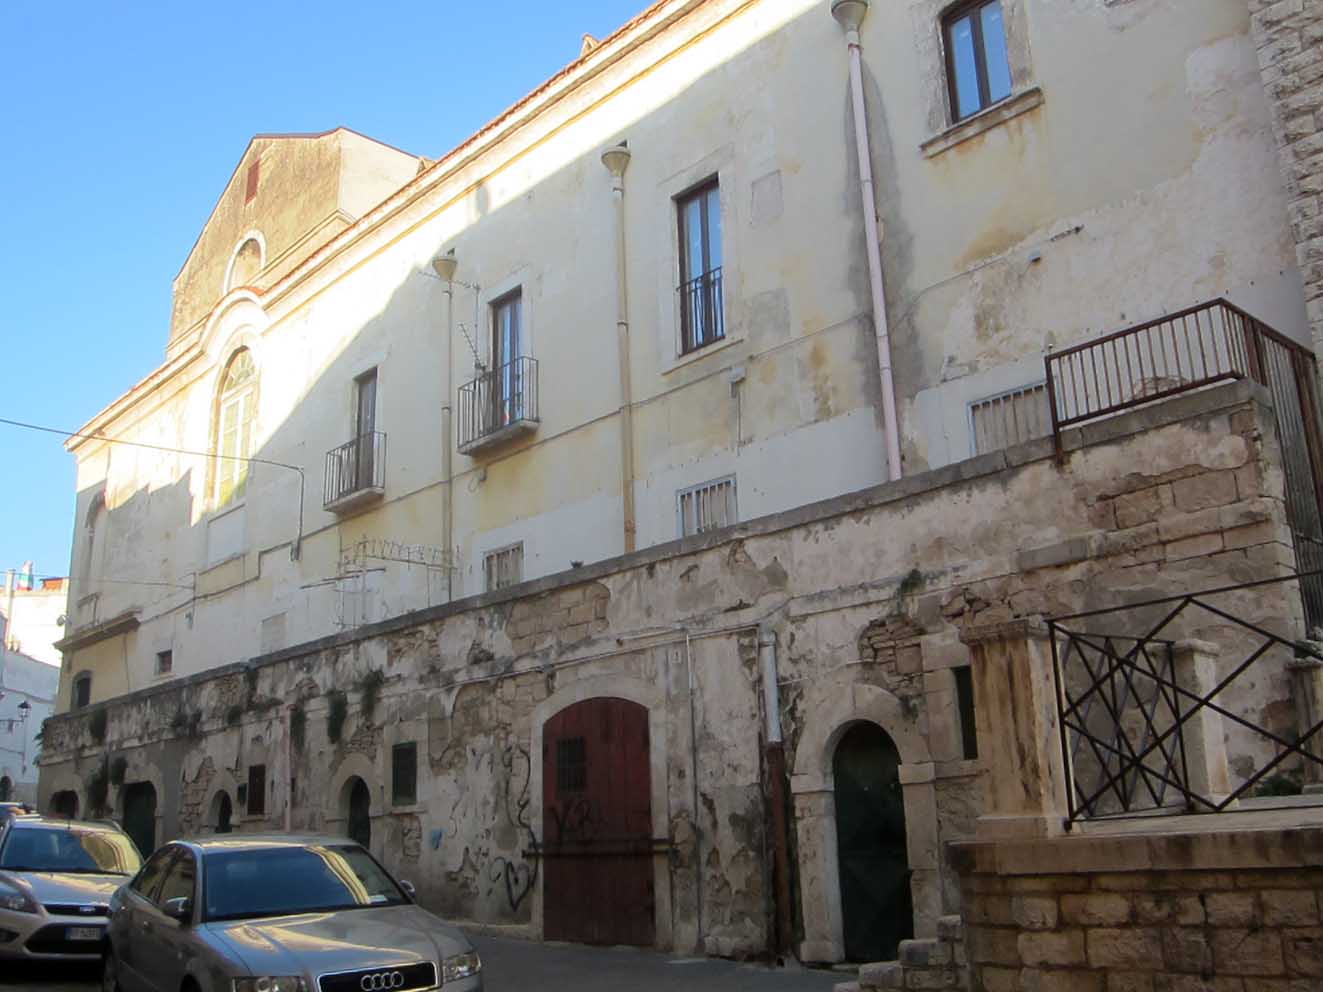 Convento di S.Francesco d'Assisi (ex) (convento) - Bitonto (BA) 